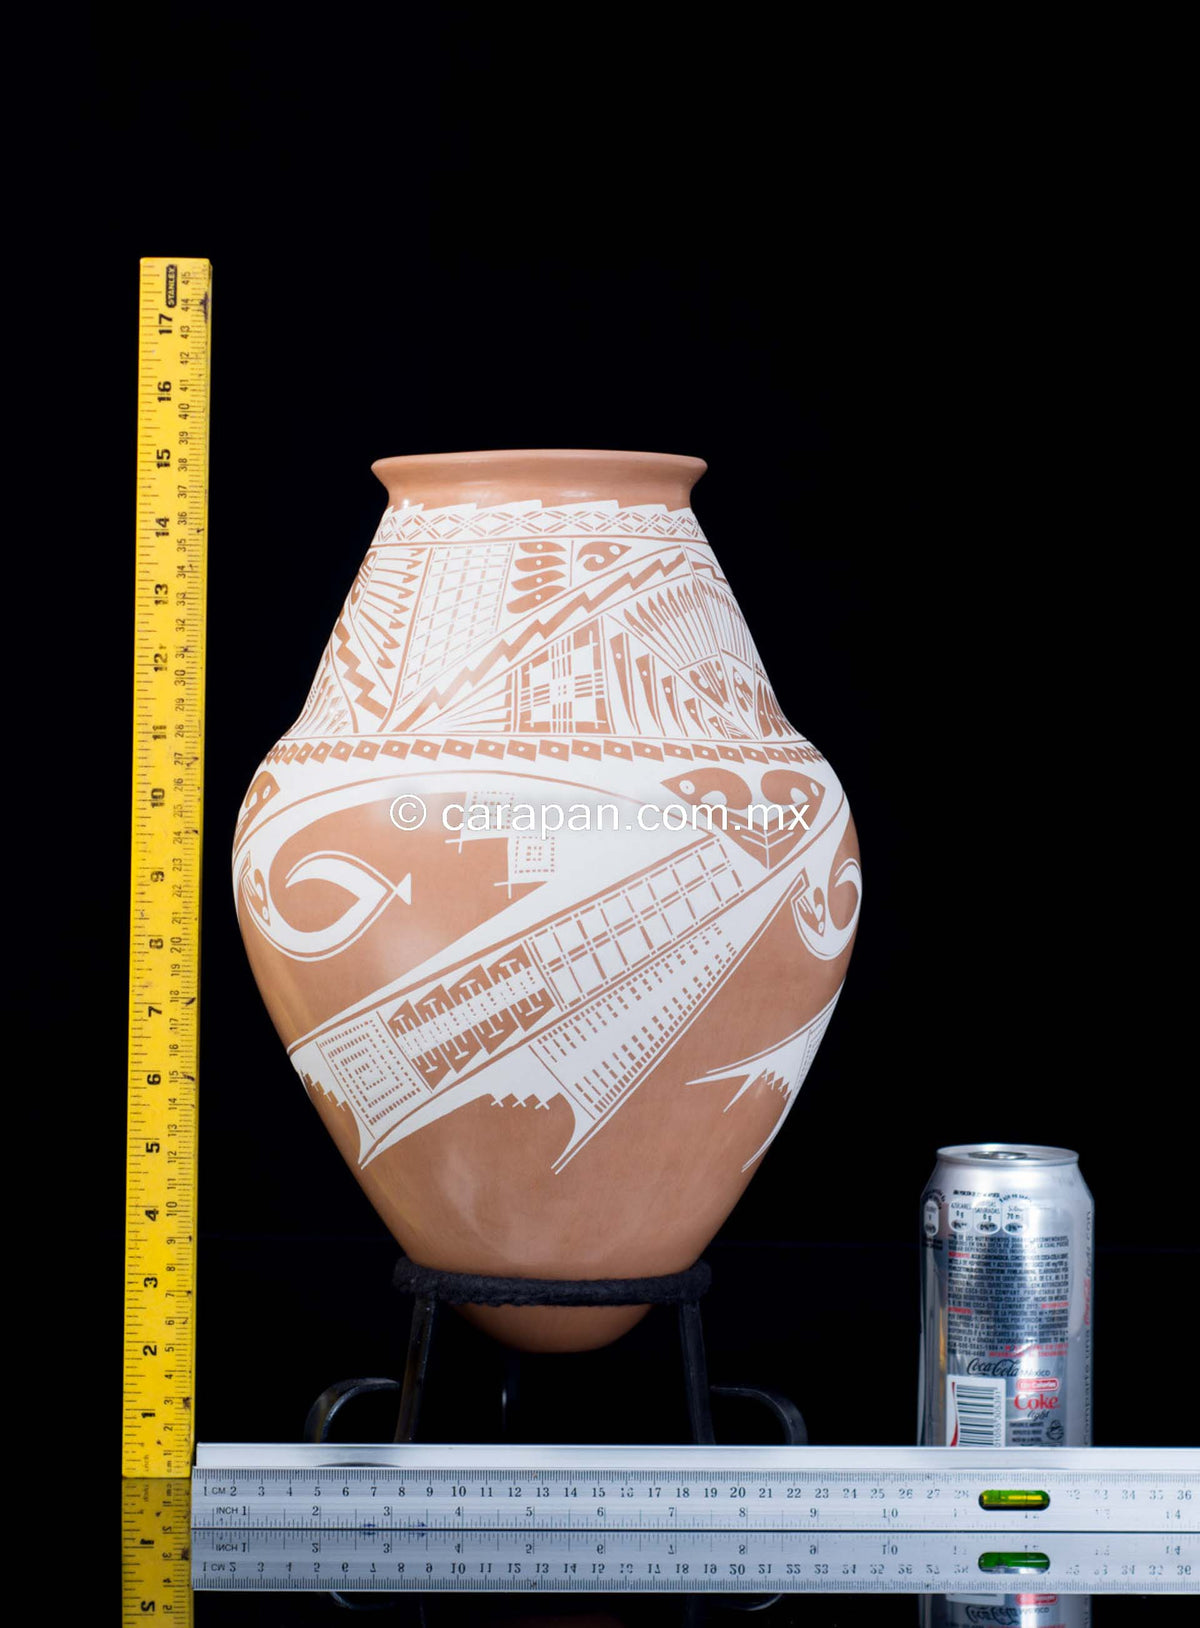 Clay pot Mata Ortiz Pottery from Chihuahua Mexico